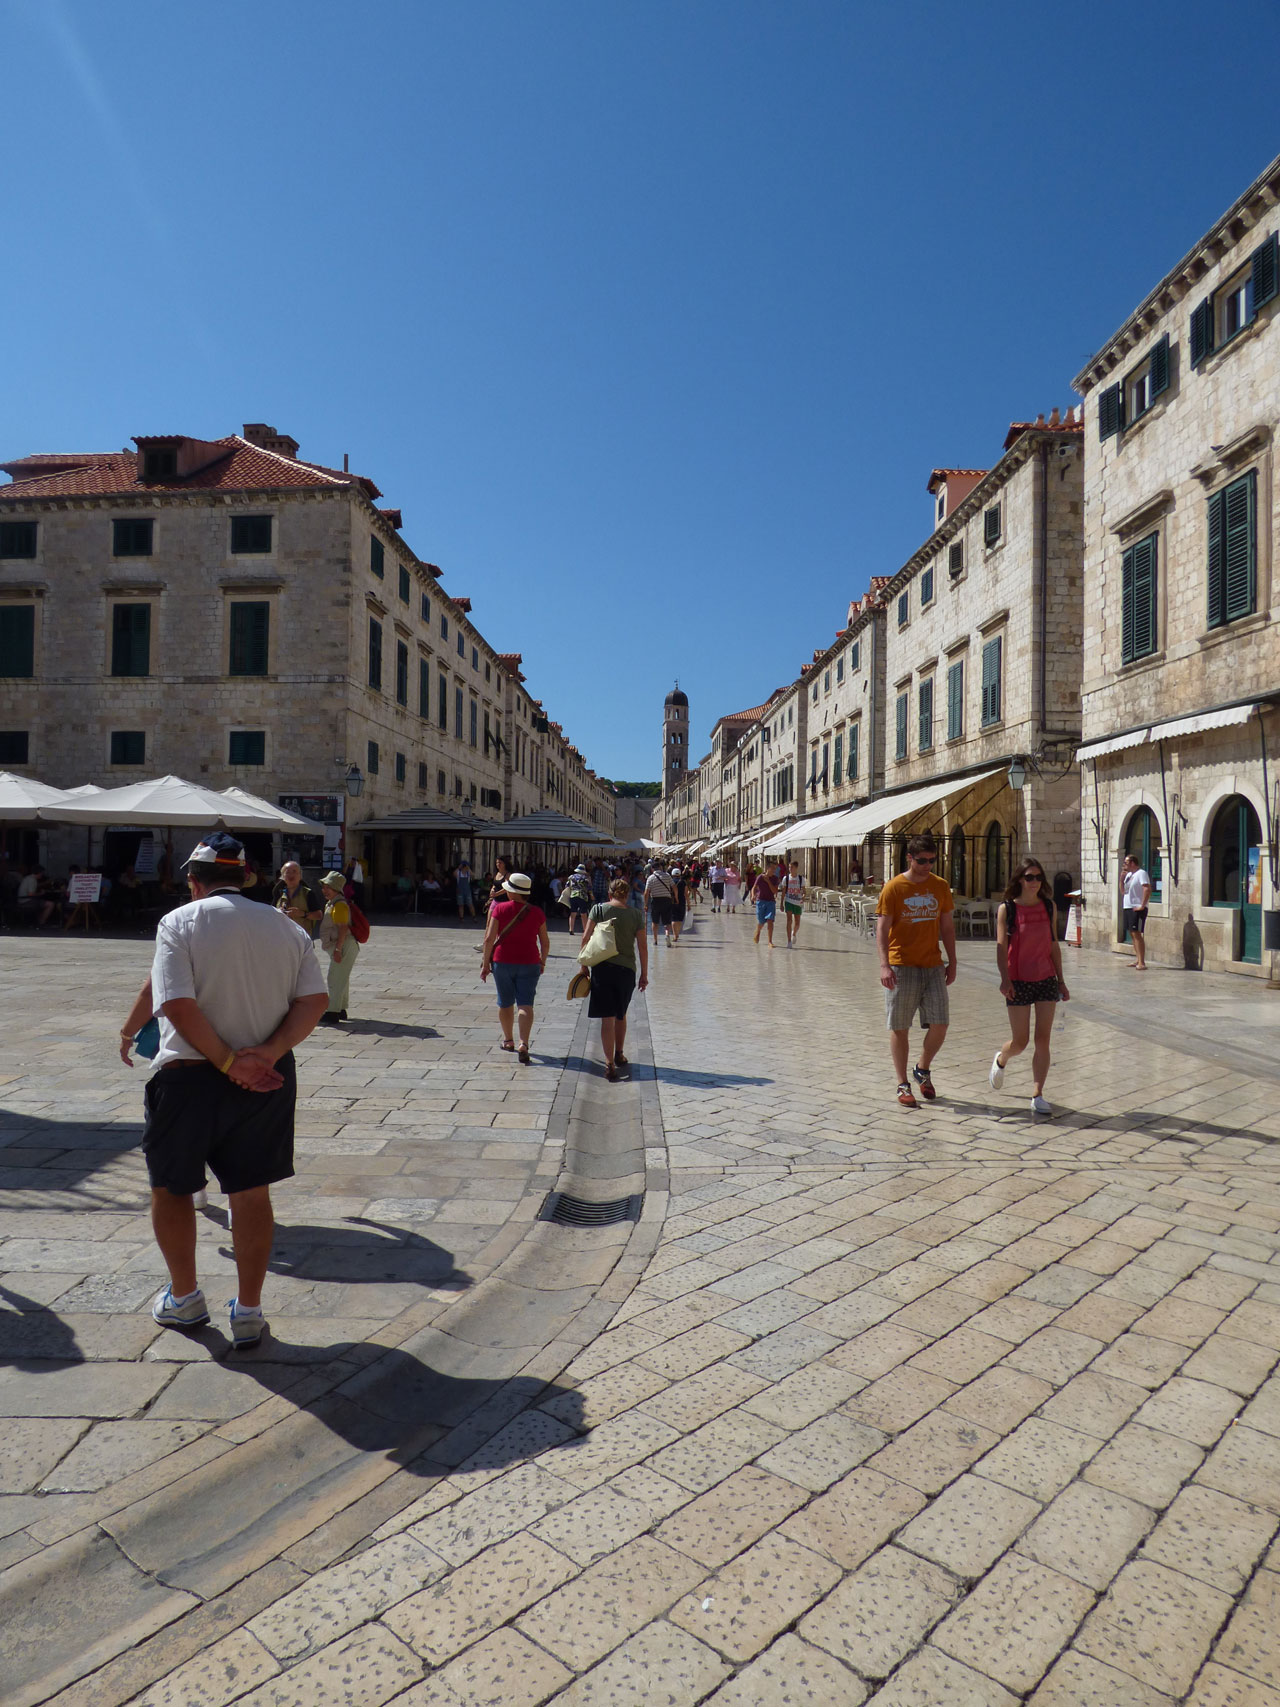 The Stradun, Dubrovnik